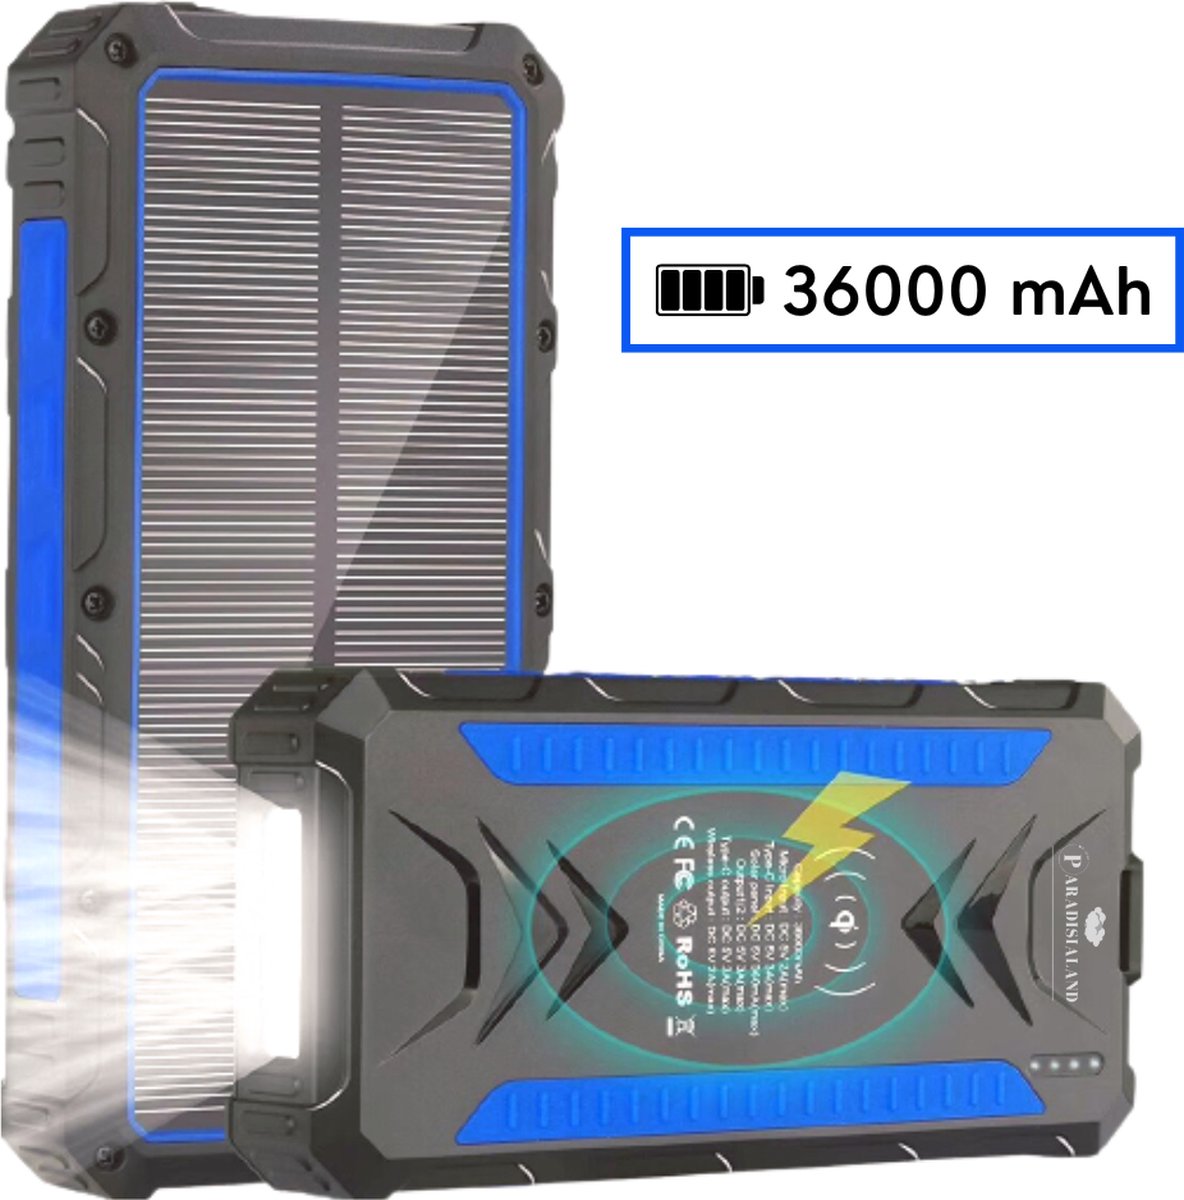 Paradisialand Solar Powerbank 36.000mAh Capaciteit - Wireless Charger - Snellader Iphone & Samsung - Powerbank Zonneenergie - Waterdicht en Stofbestendig - Blauw